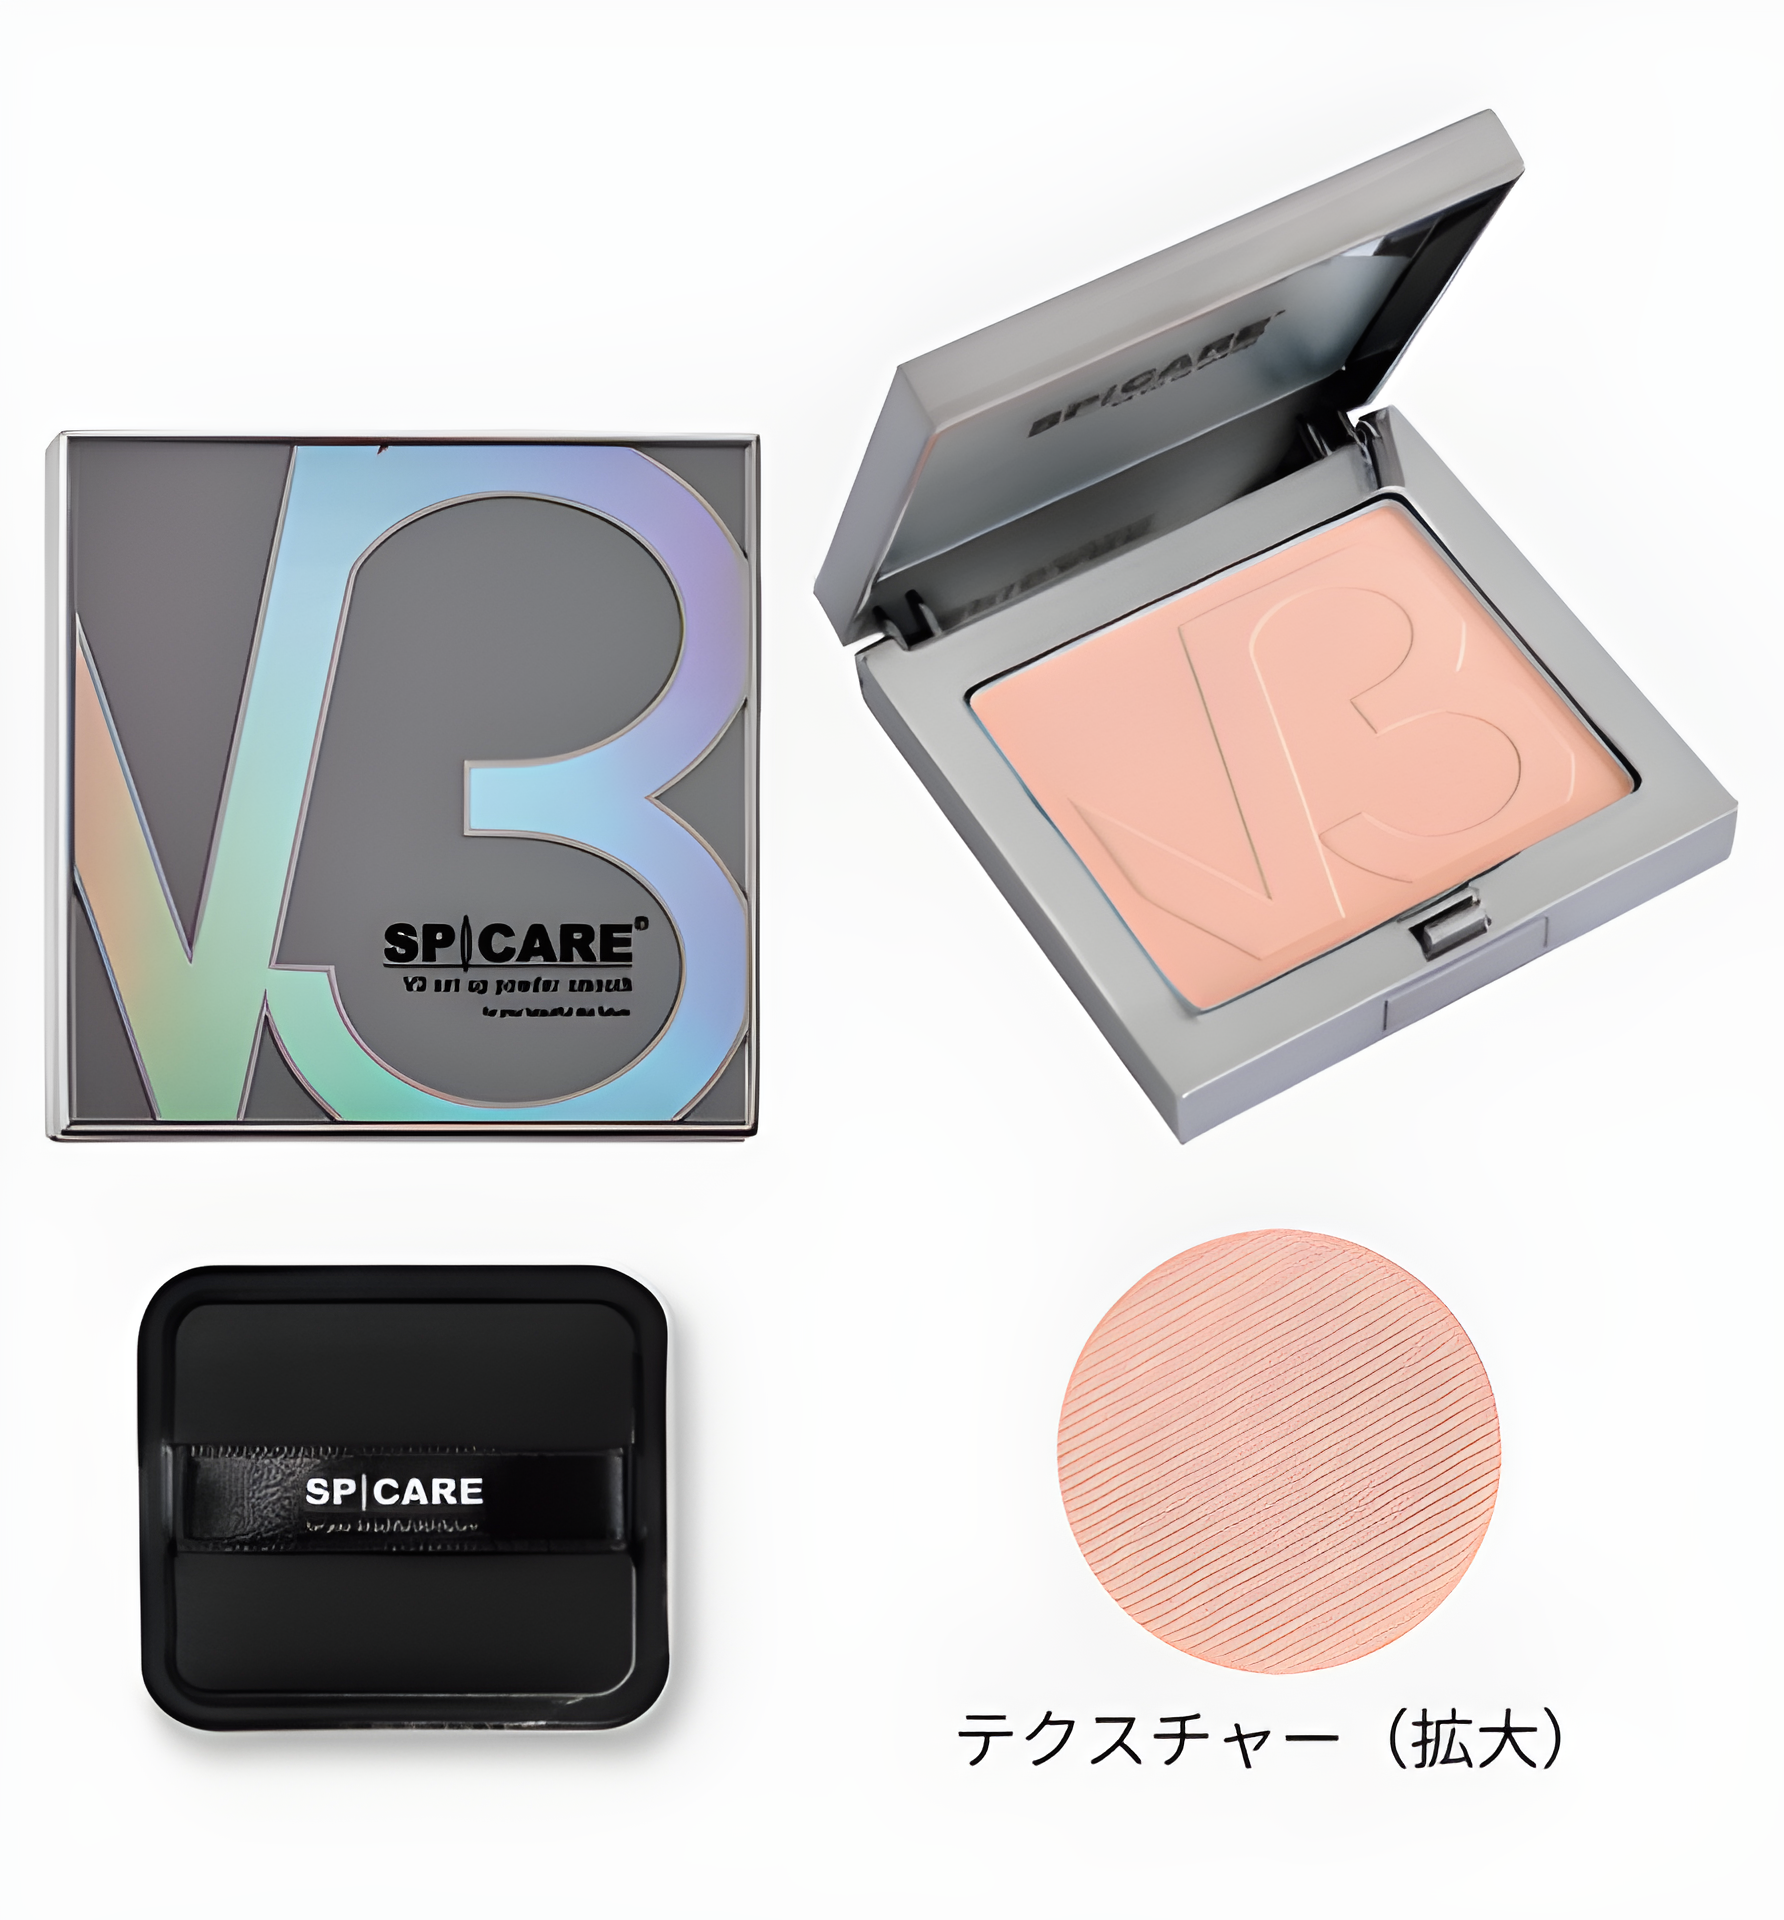 ★SPICARE V3 set up powder【smooth】ラメなし★